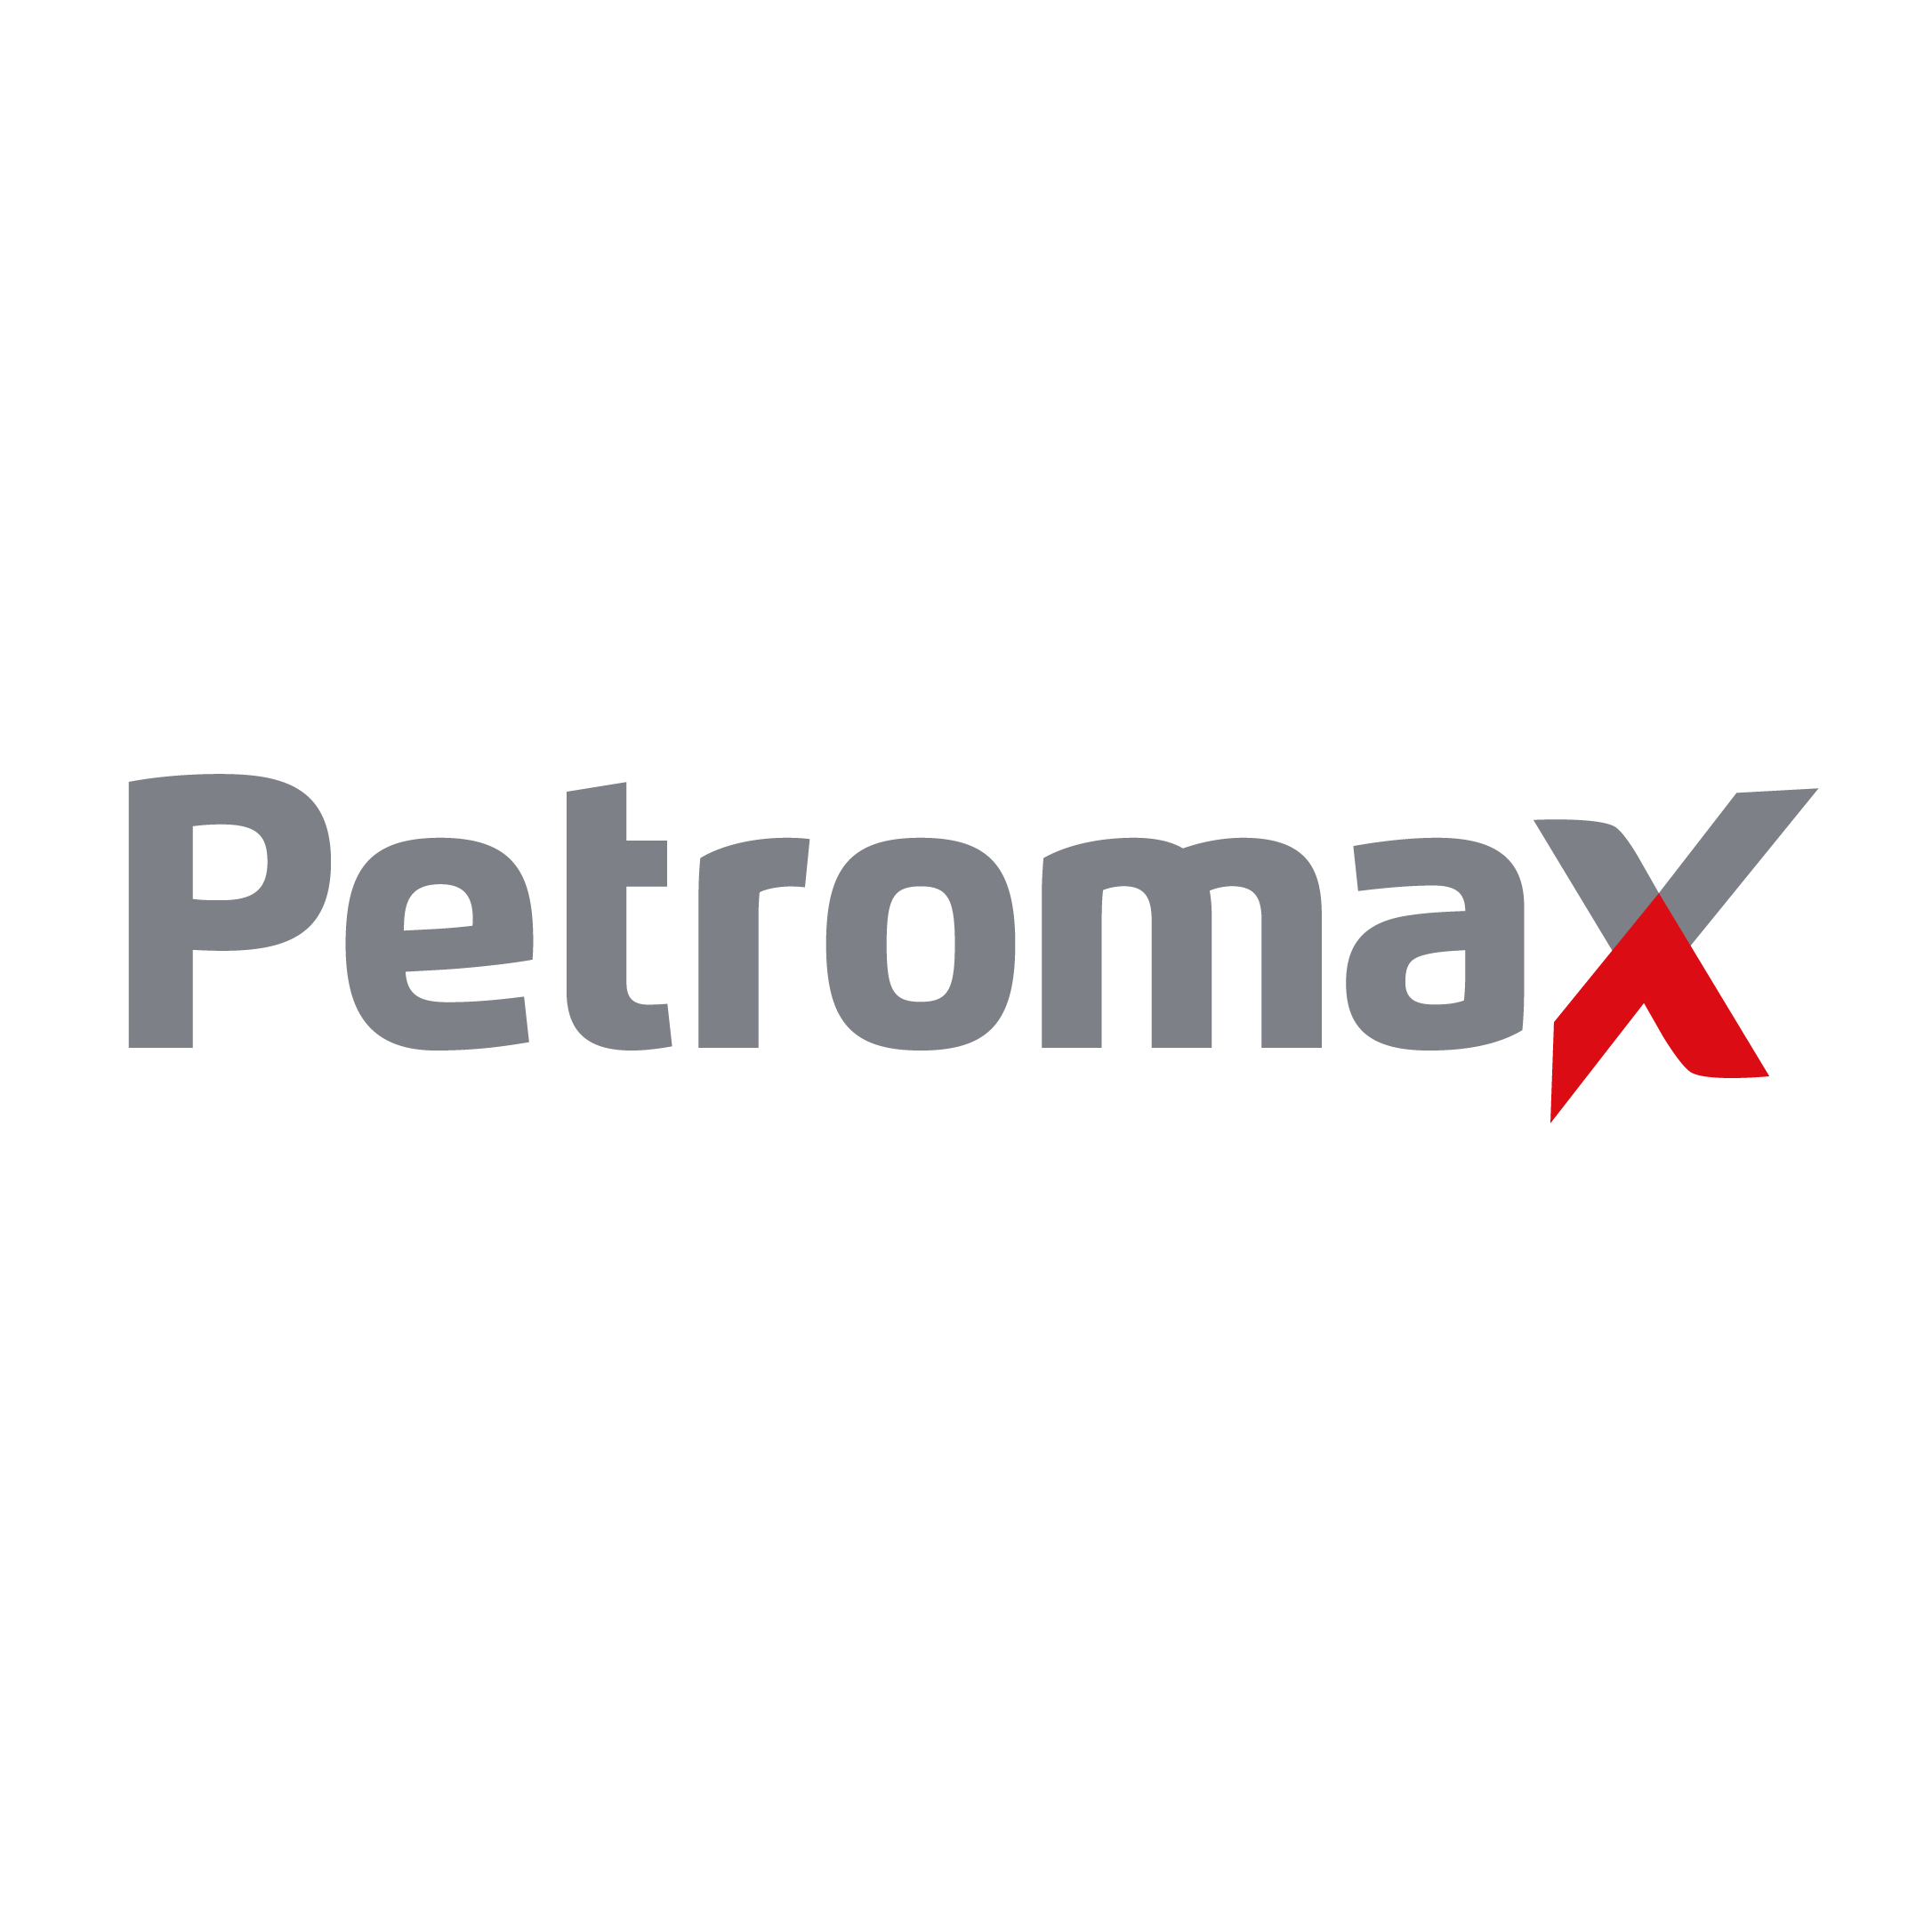 Petromax Paraguay